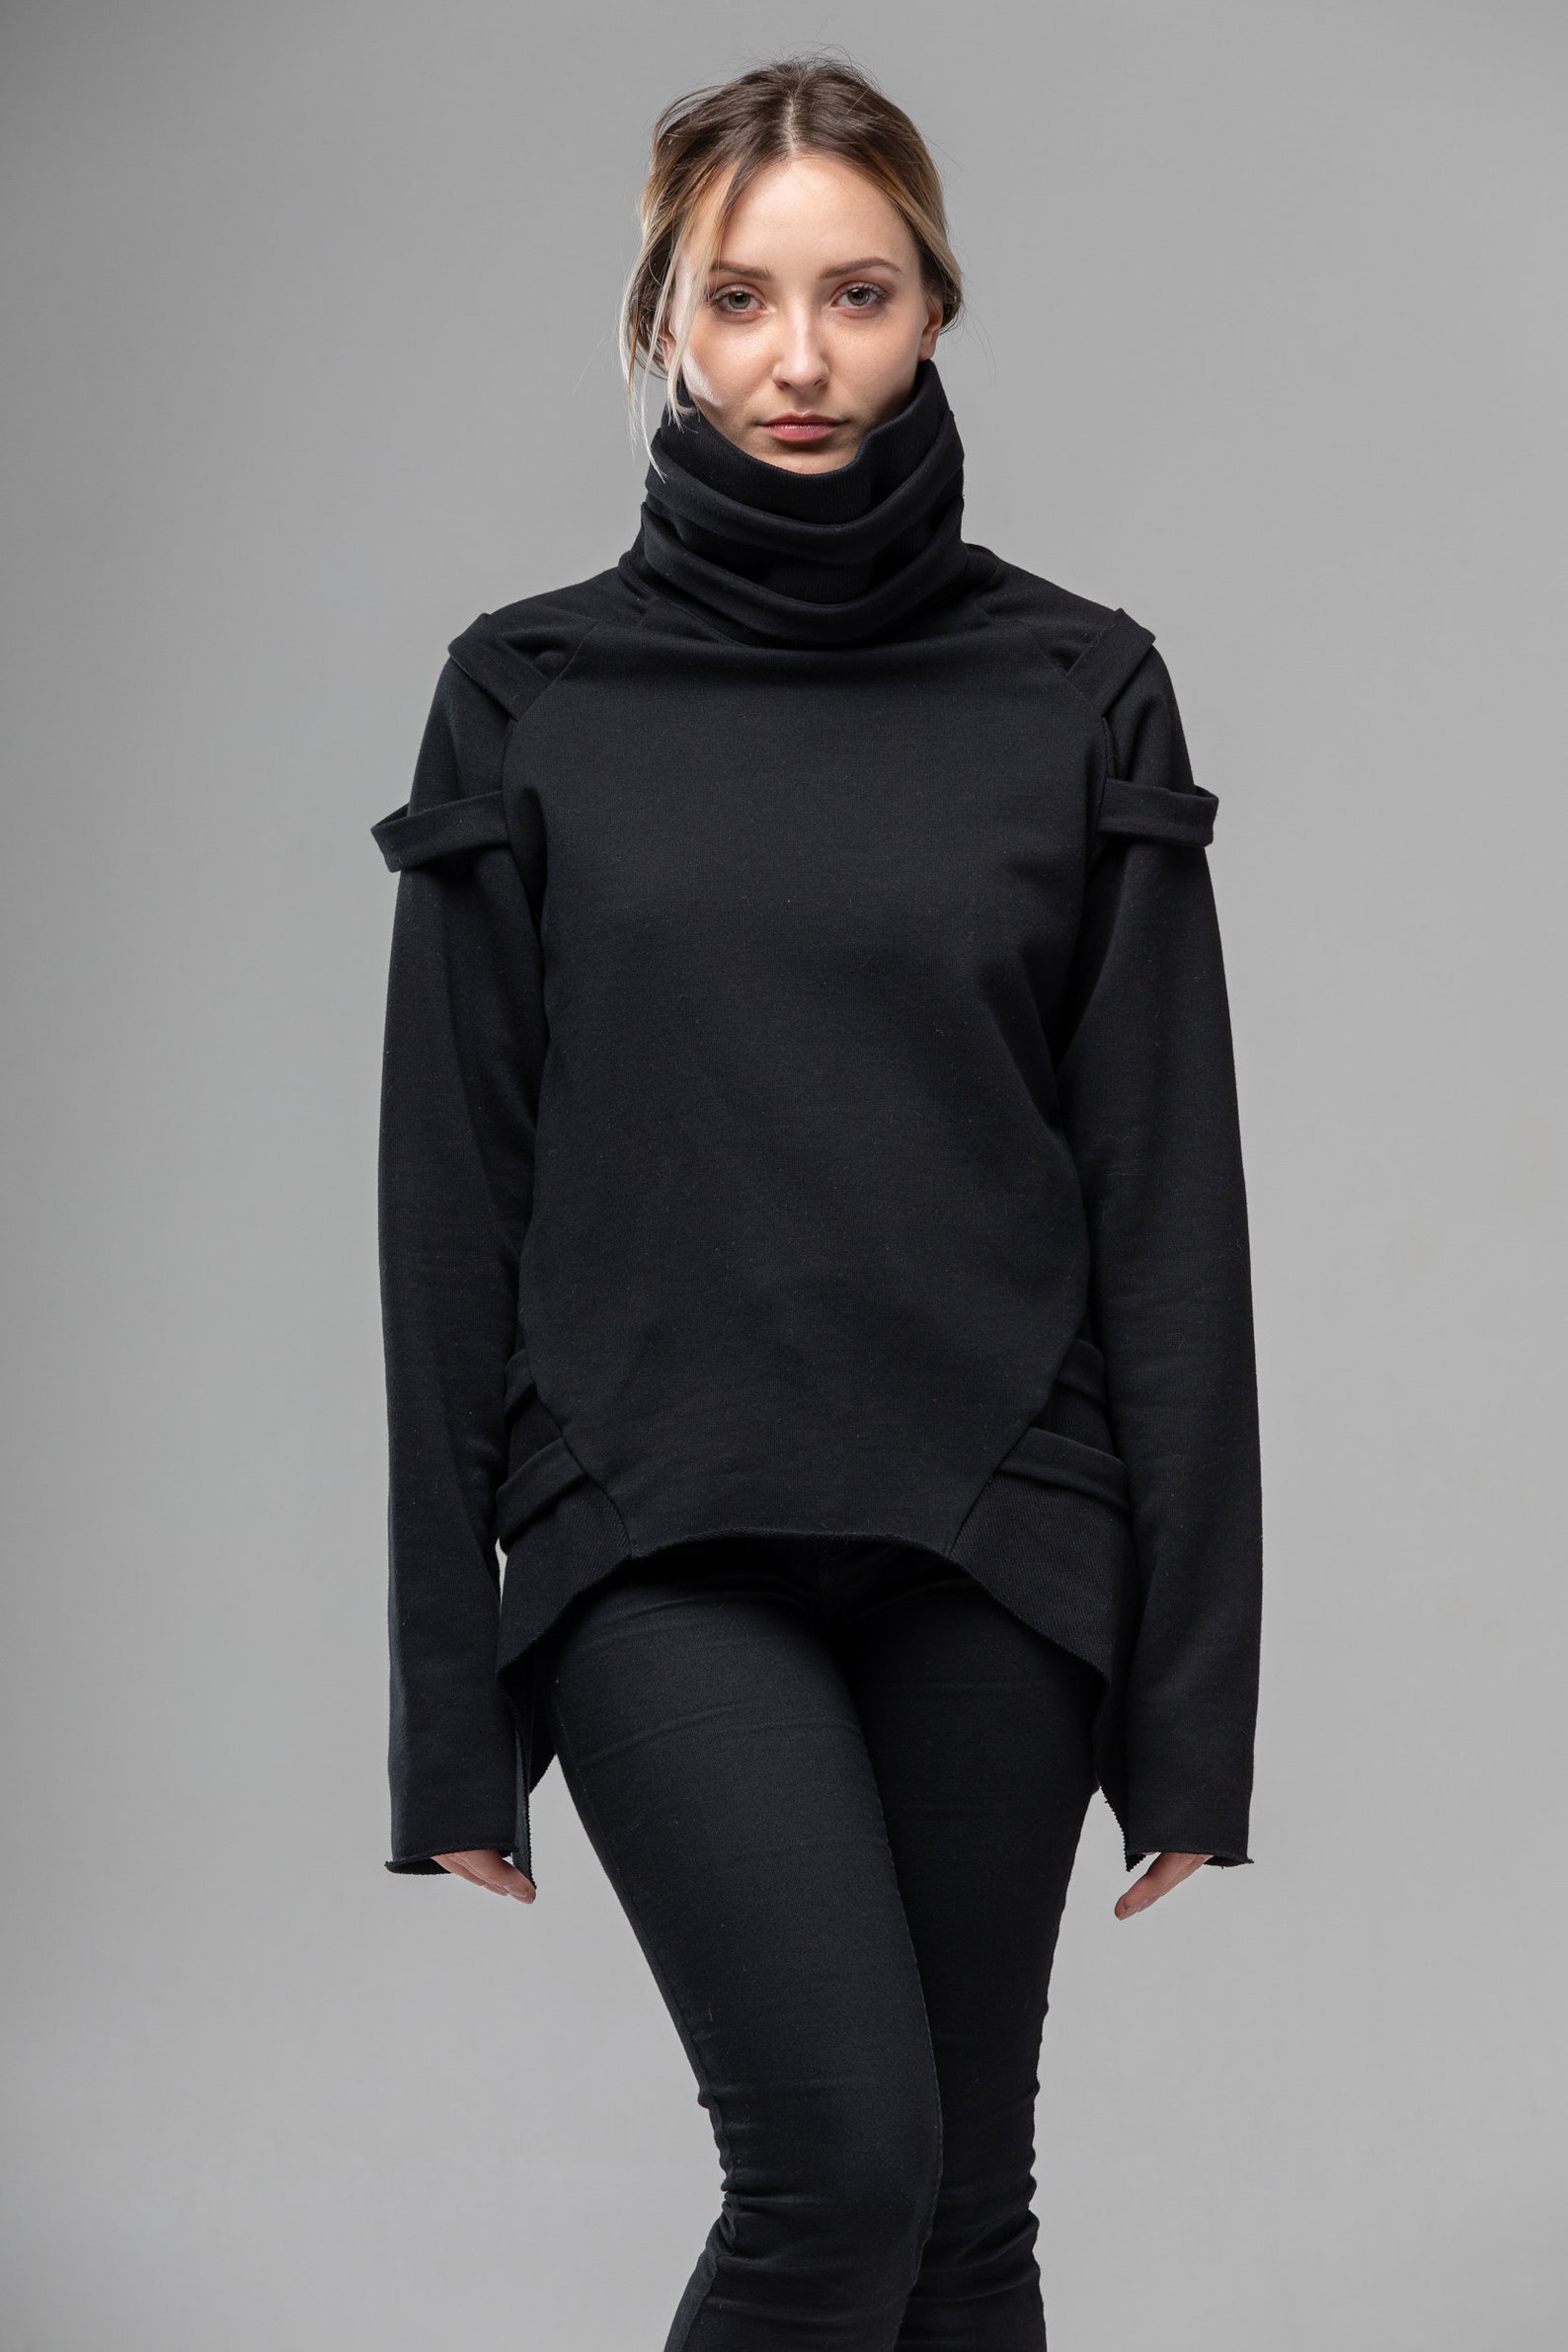 Cyberpunk gothic turtleneck sweater asymmetric oversized | Etsy